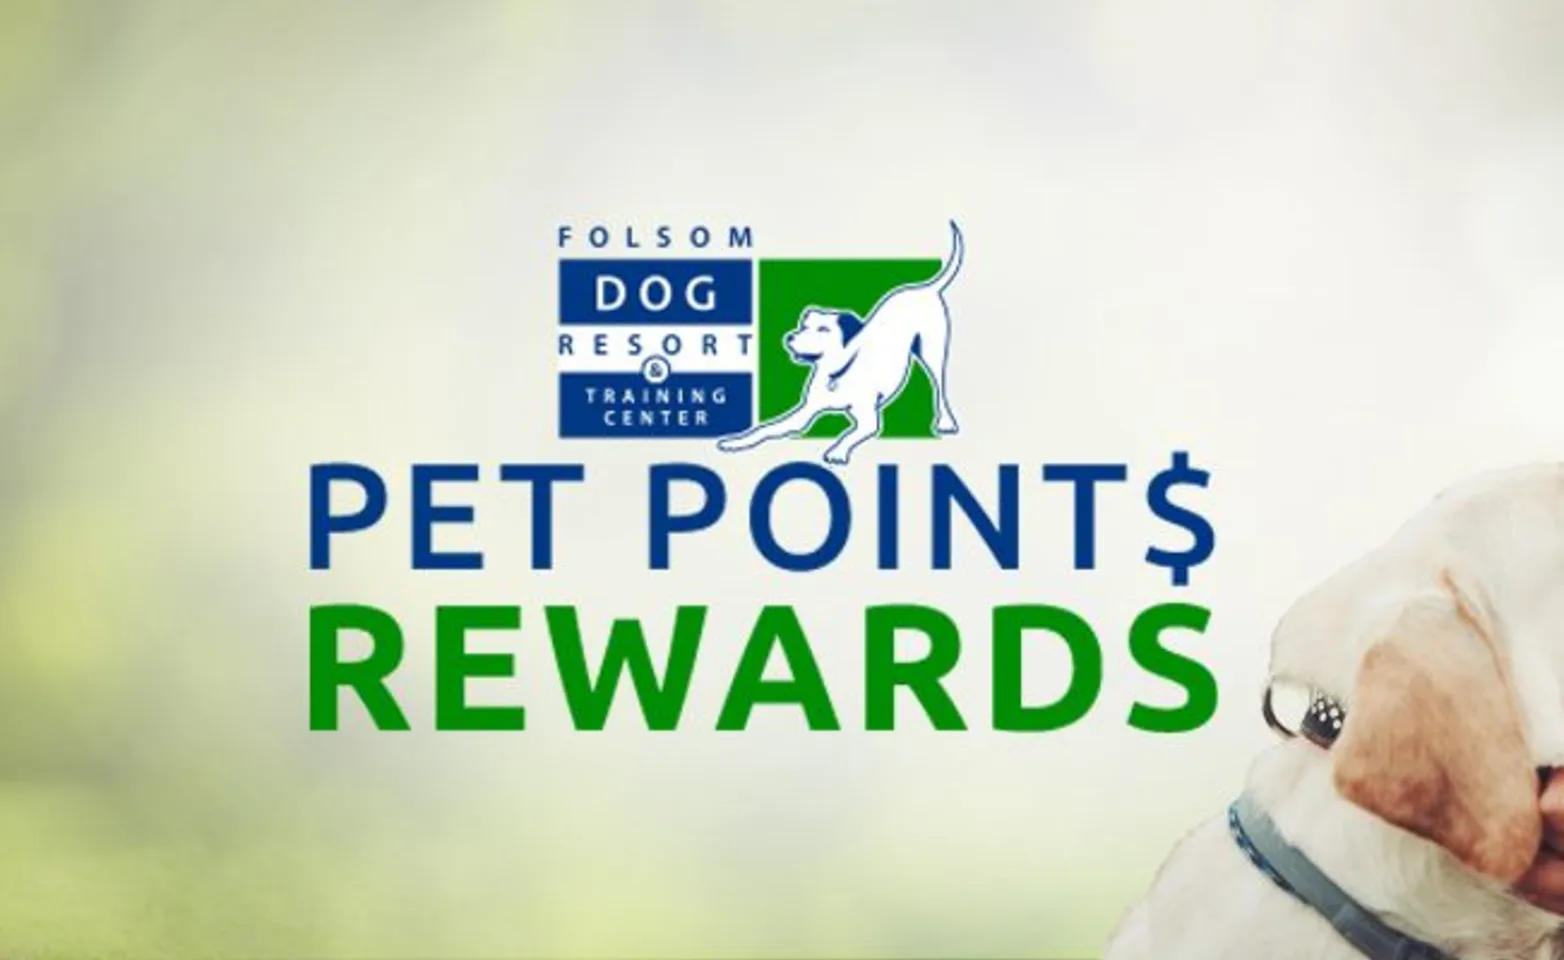 Folsom Dog Resort & Training Center - Loyalty Rewards